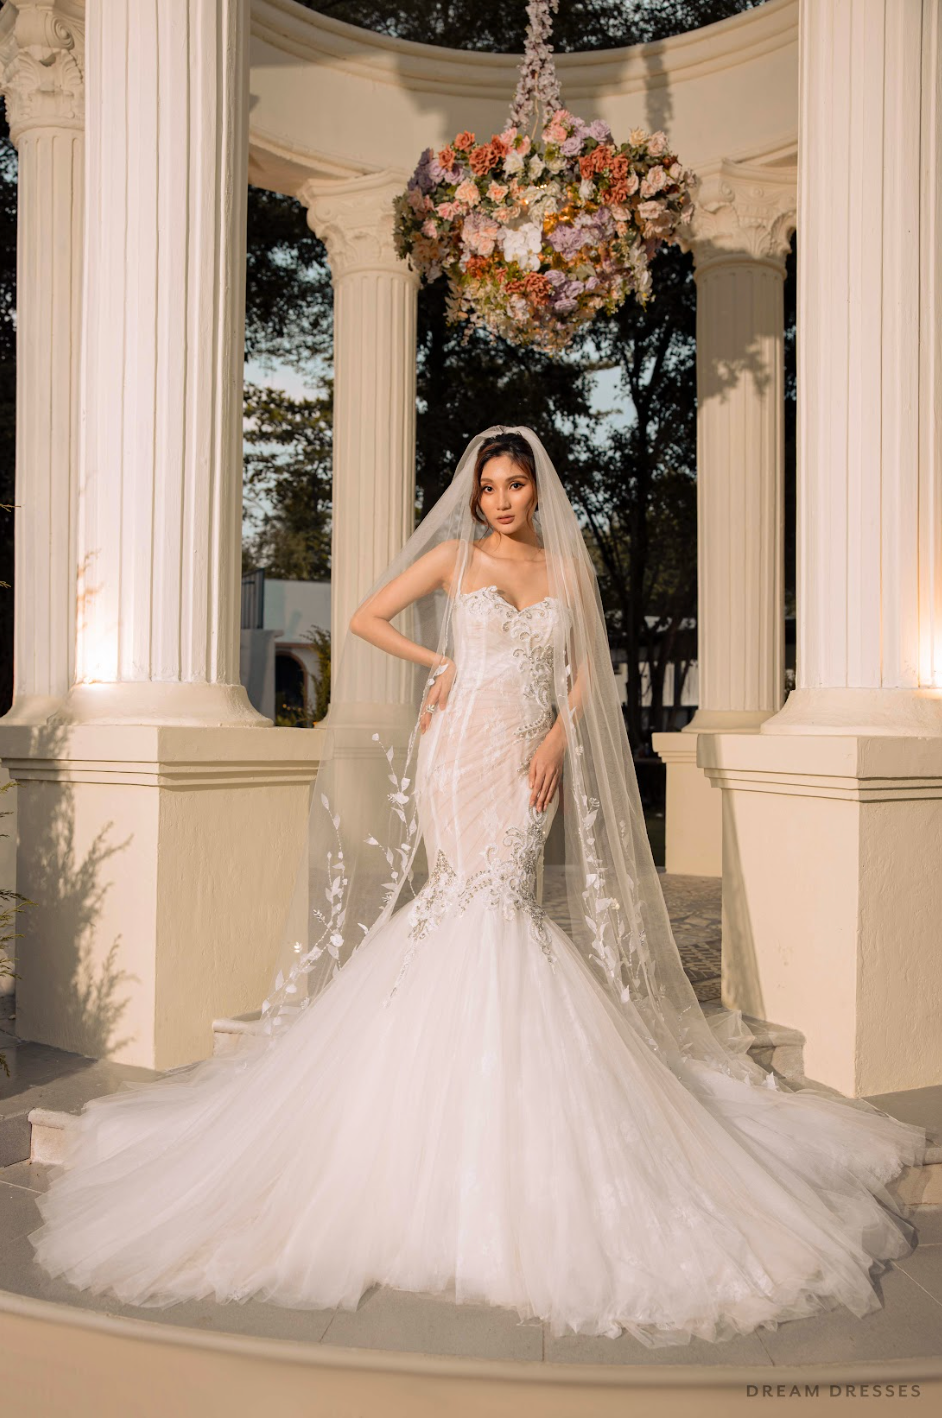 3D Embellished Wedding Veil (#KEISHA)